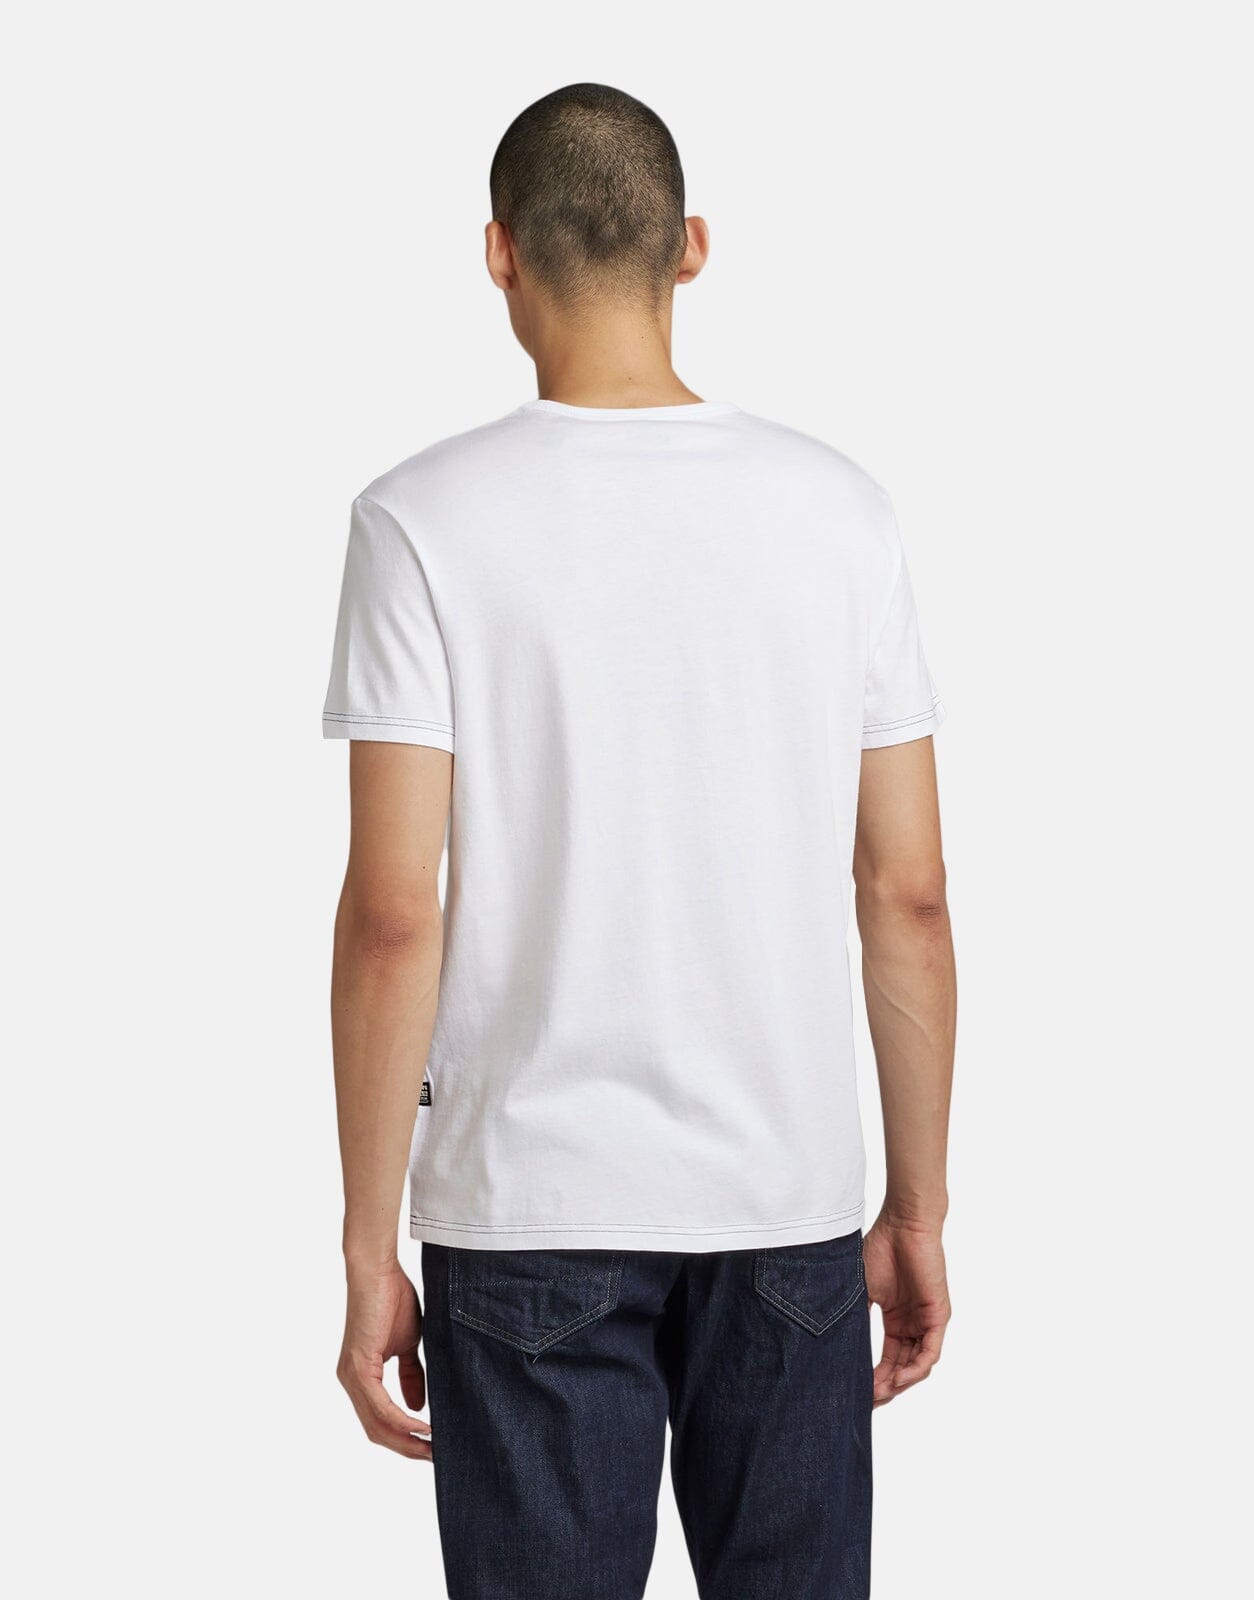 Bandana White T-Shirt - Subwear